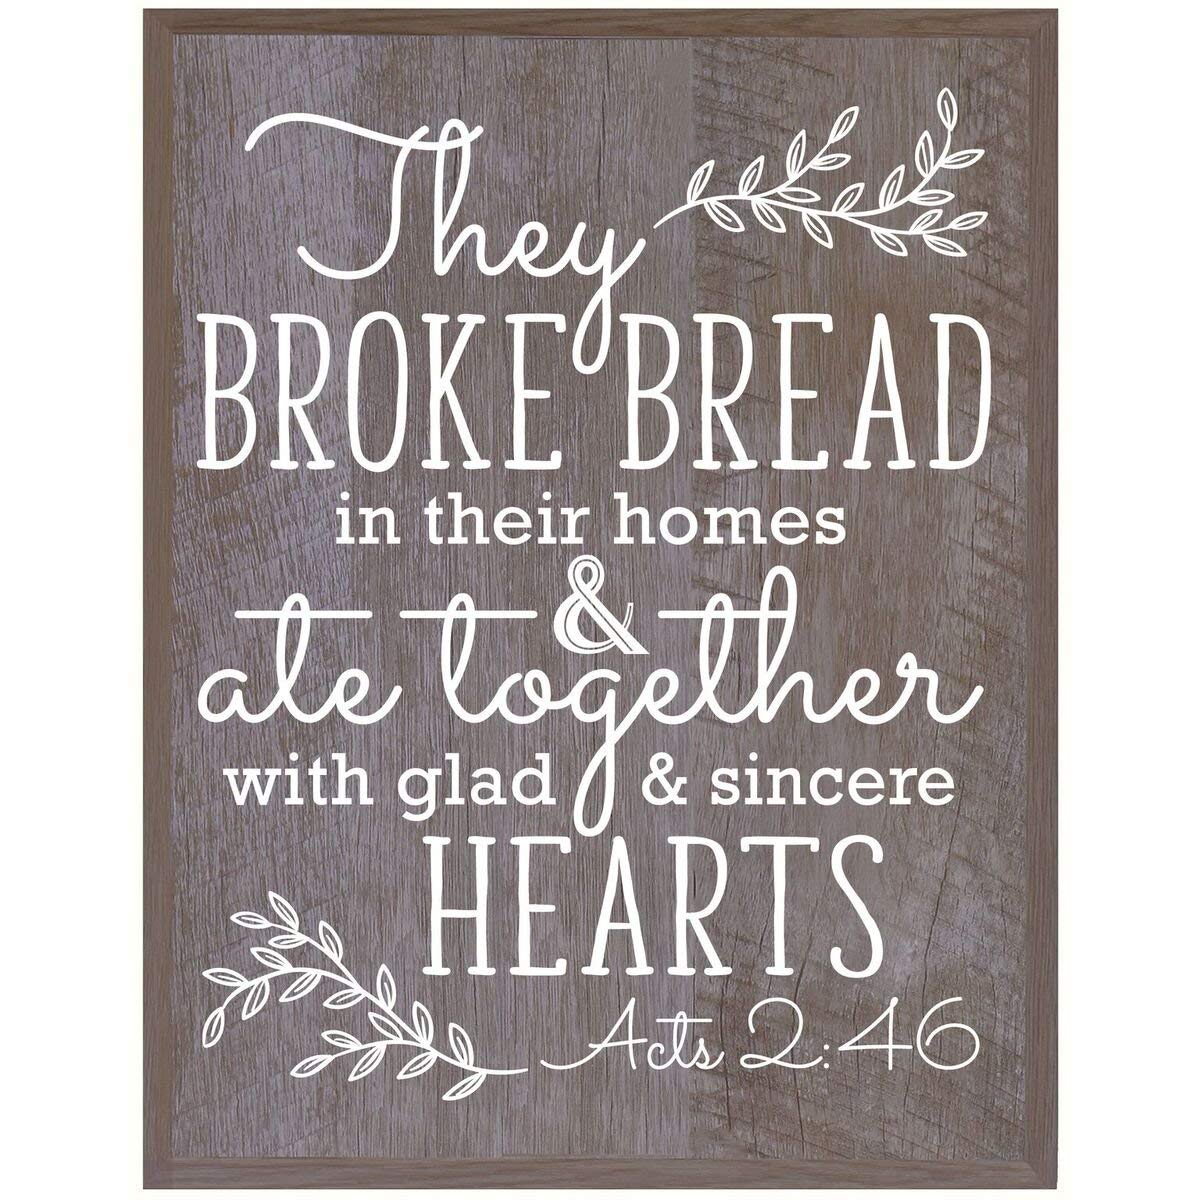 Wedding Sign Wall Plaque - They Broke Bread